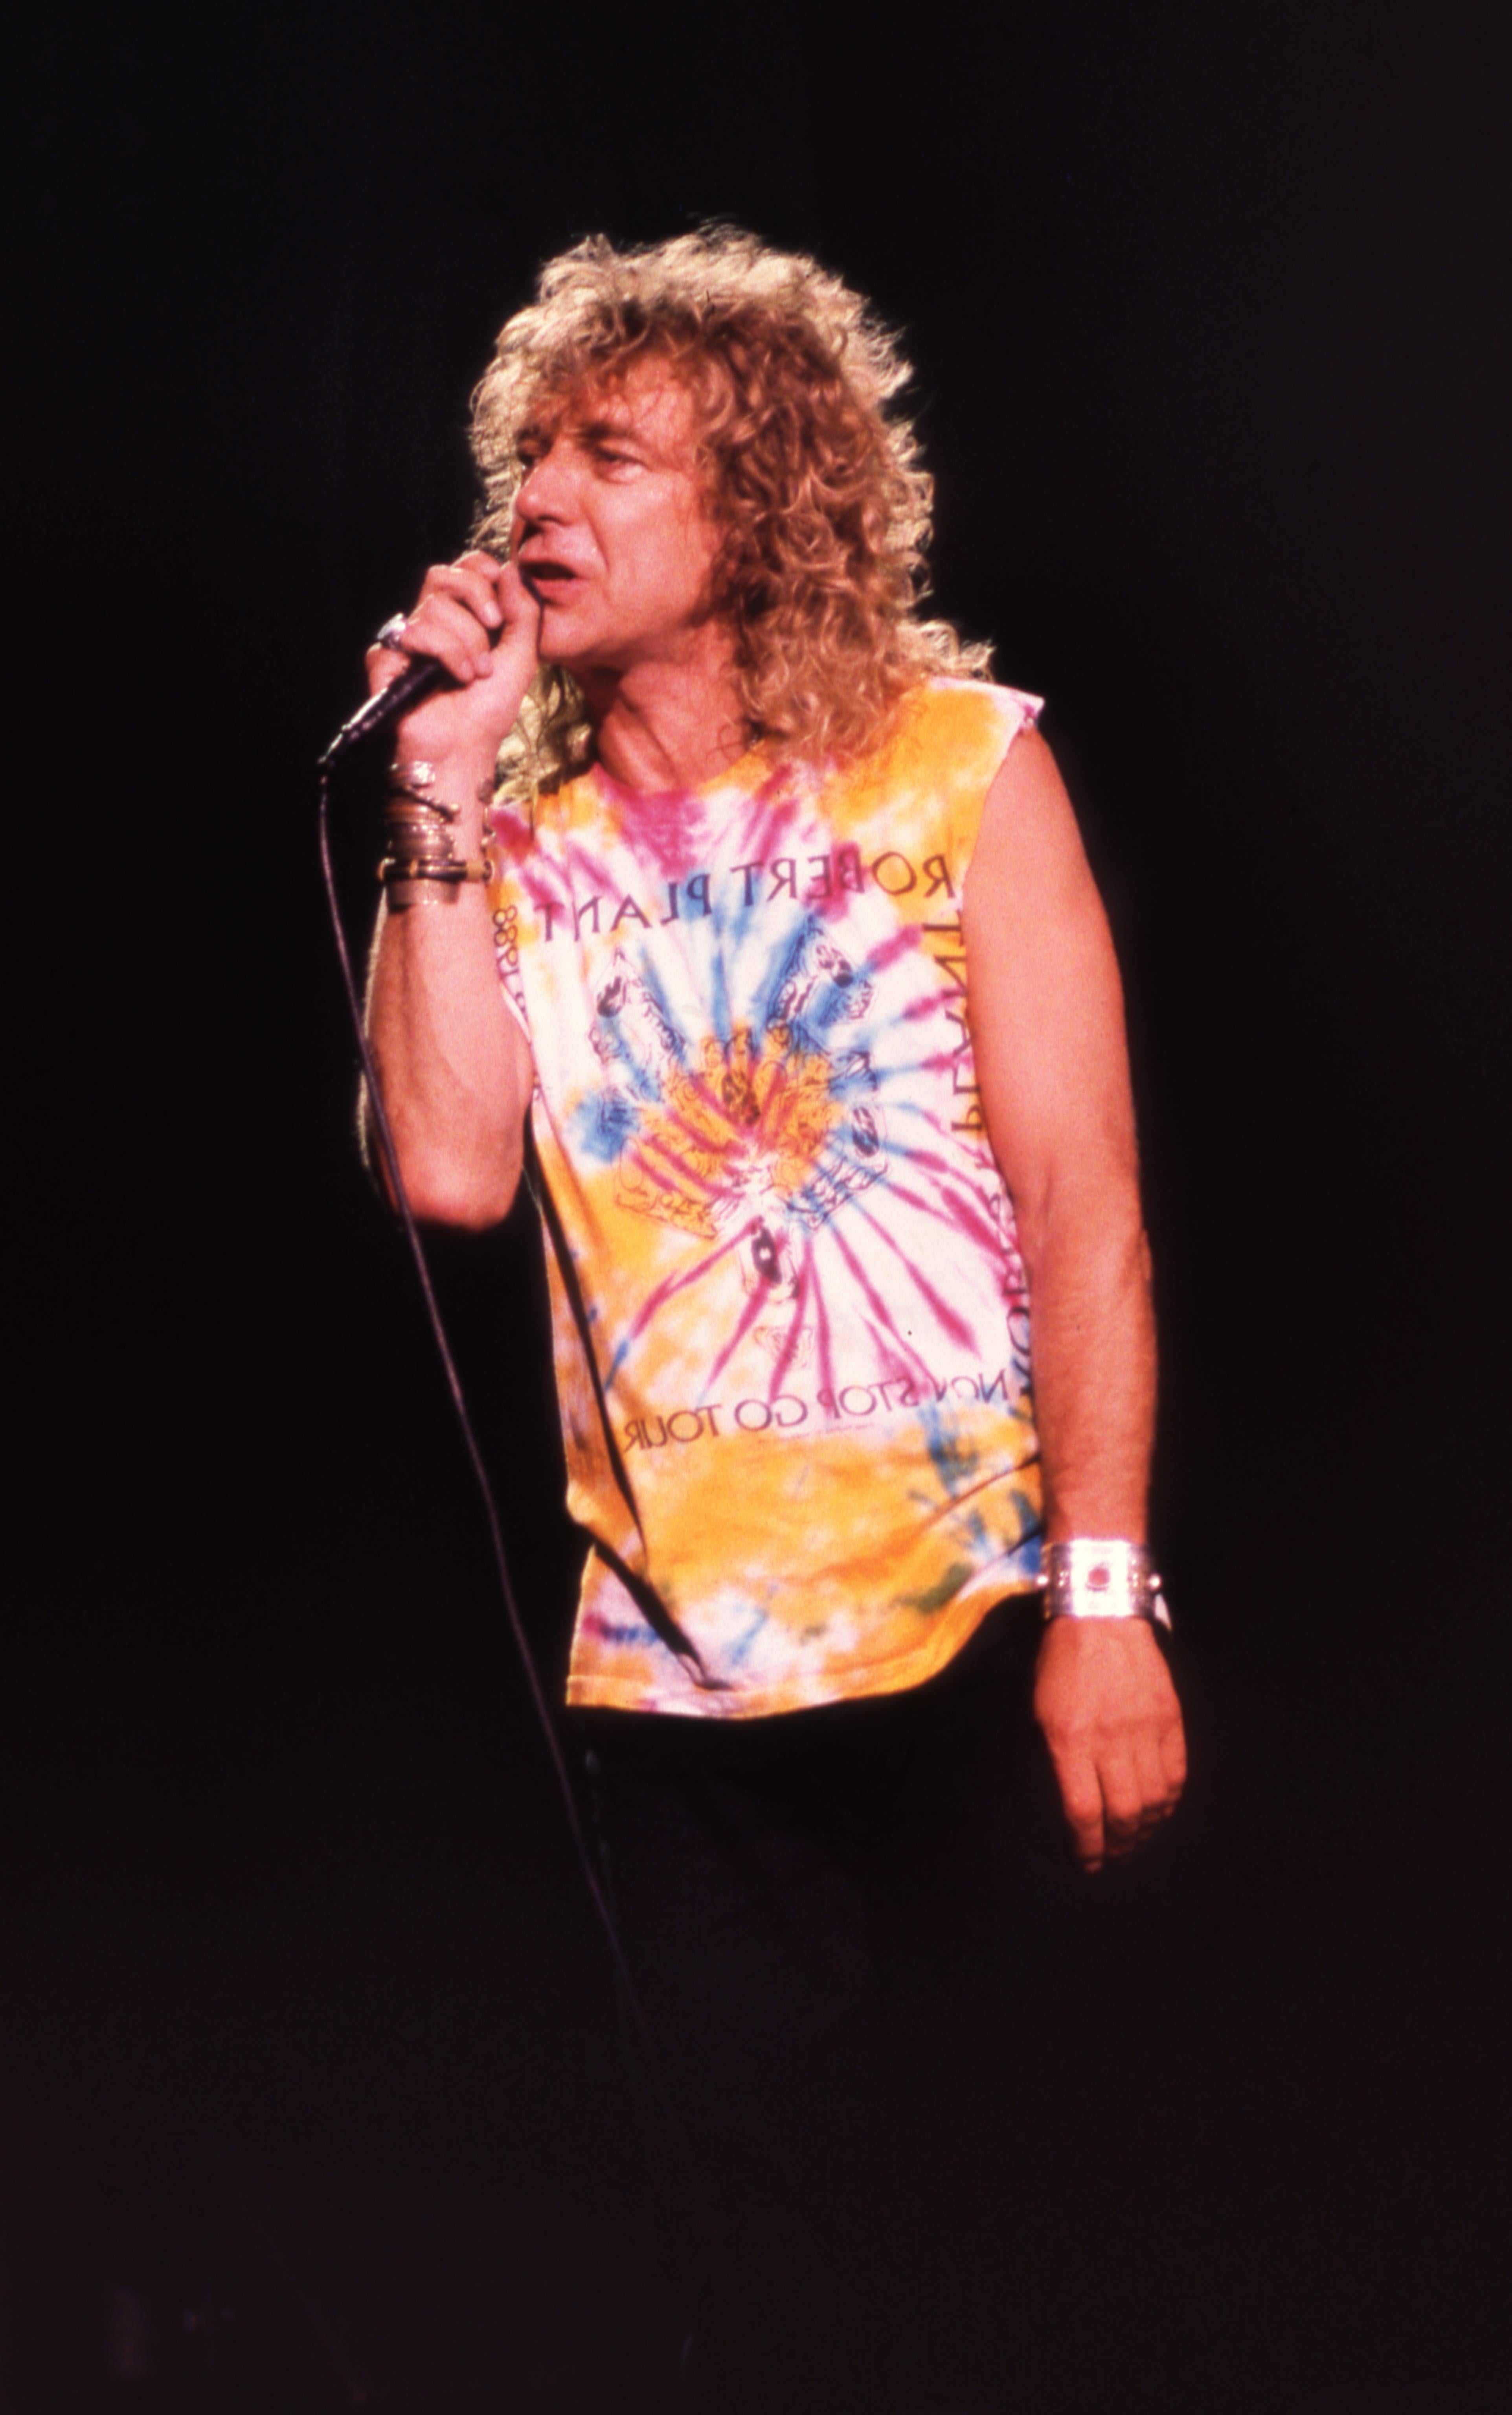 Tony Defilippis Color Photograph - Robert Plant Performing in Tie DyeFine Art Print